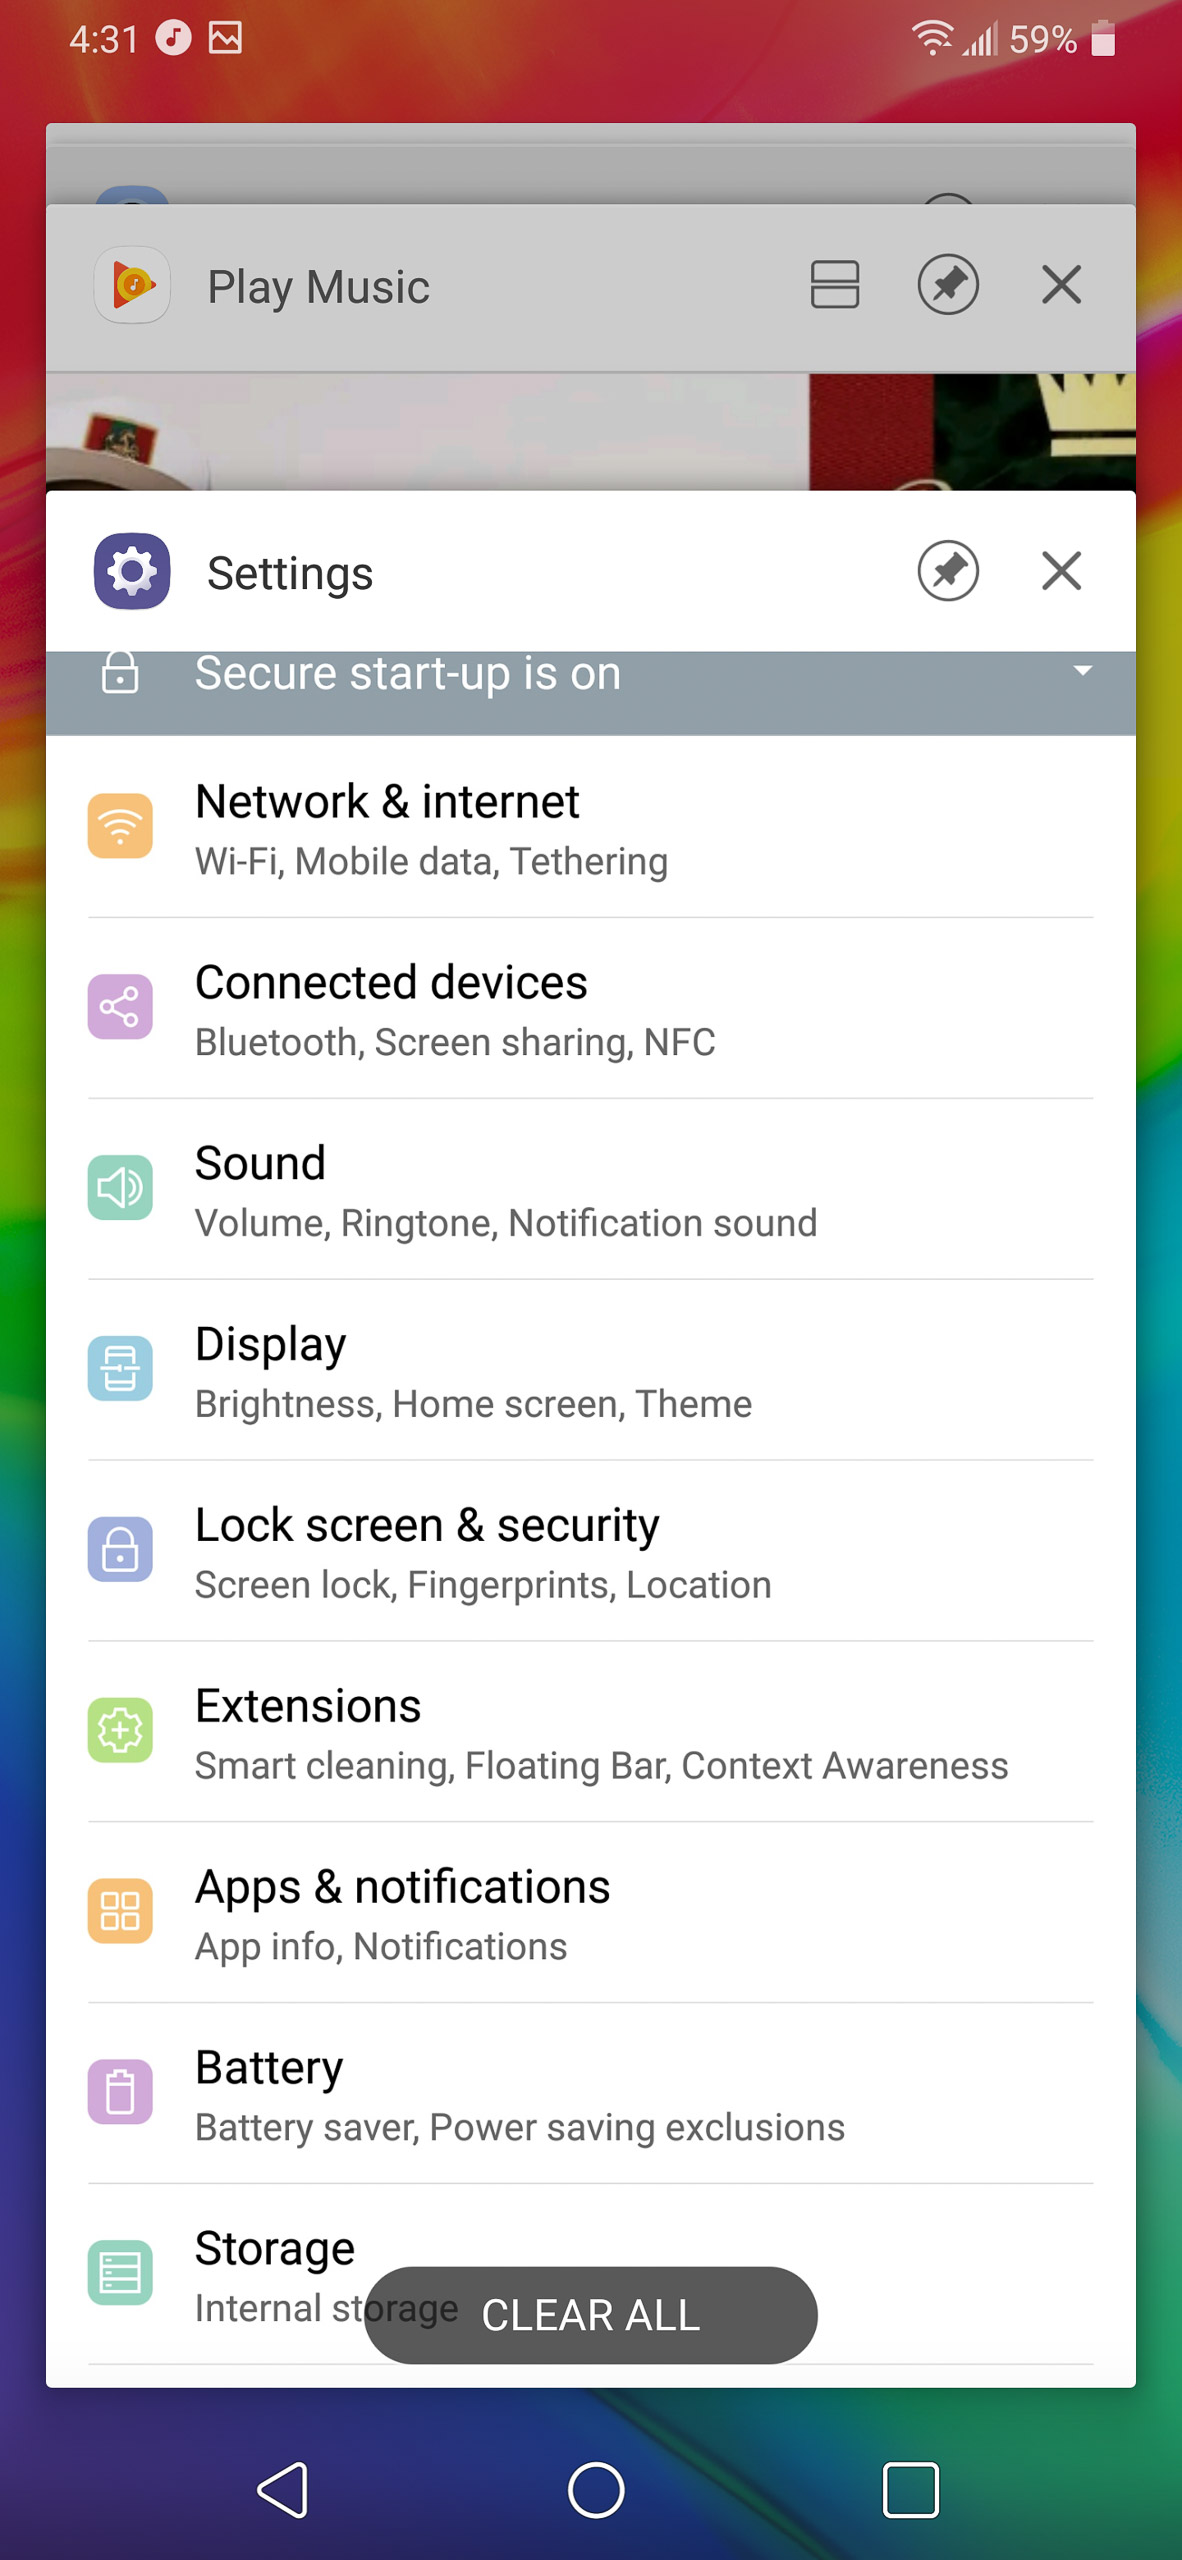 LG G7 ThinQ settings screen